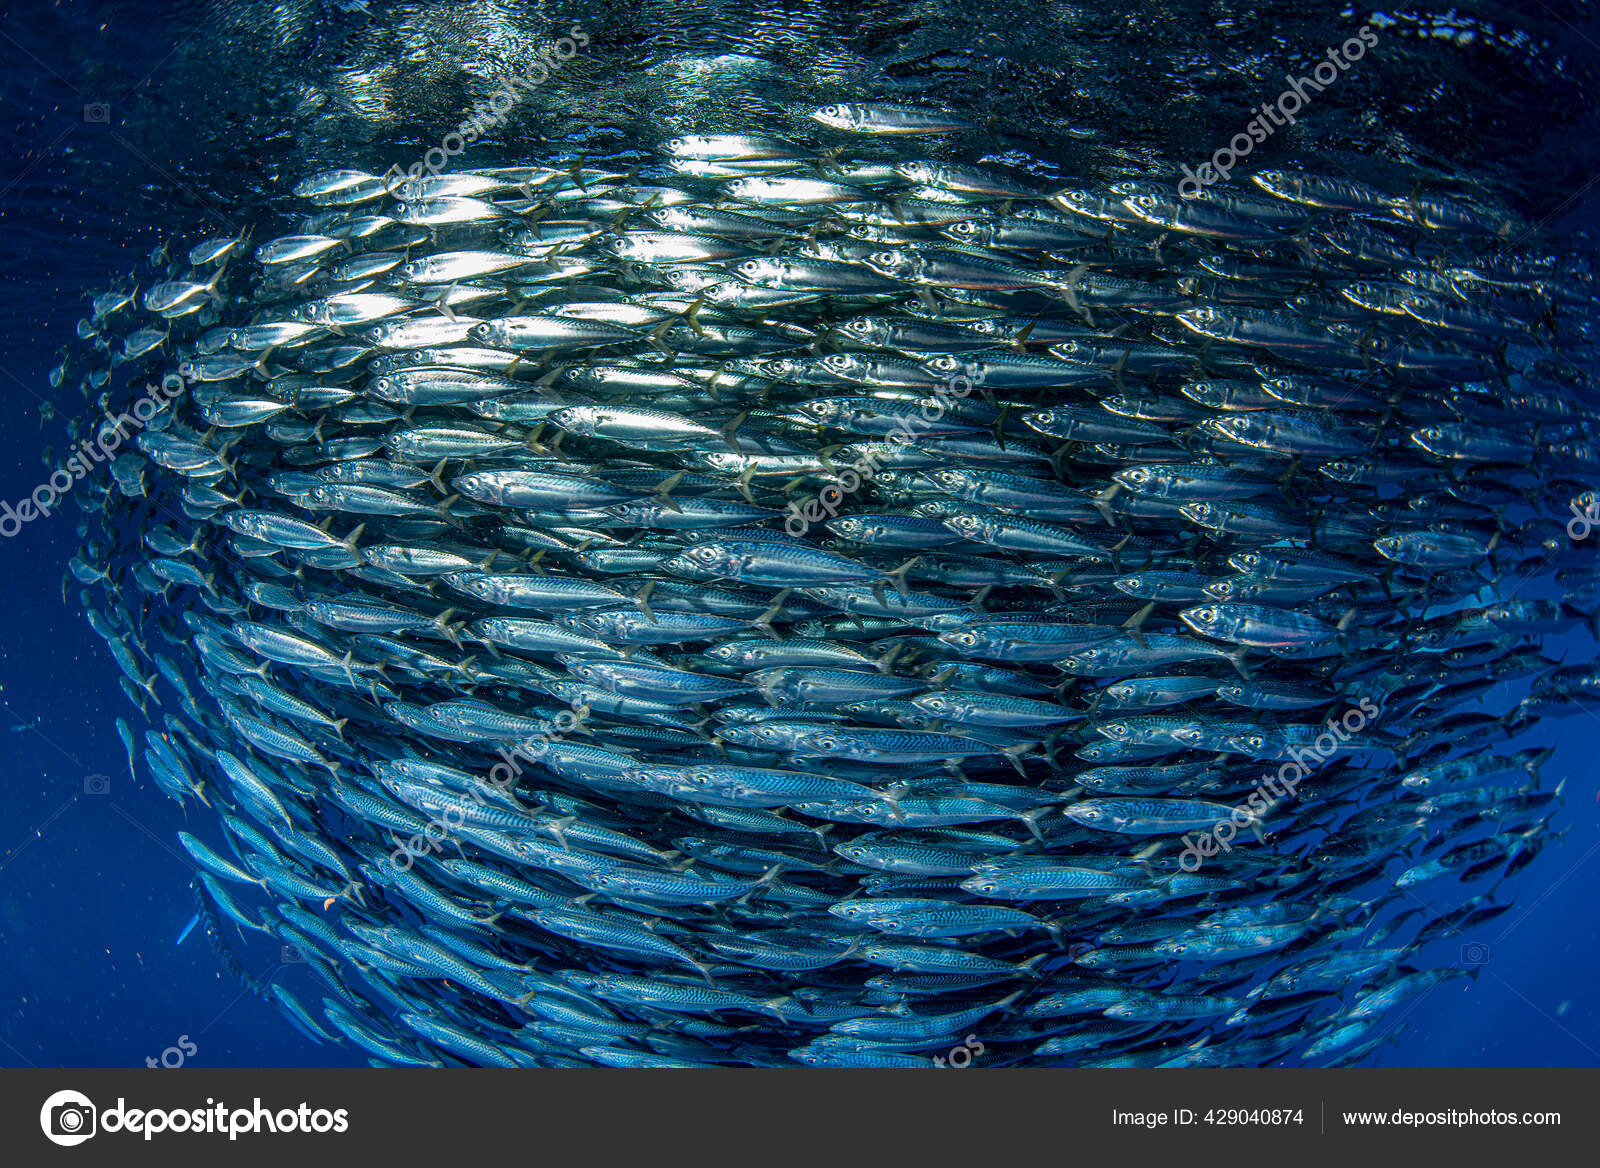 Giant Sardines School Fish Bait Ball — Stock Photo © izanbar #429040874